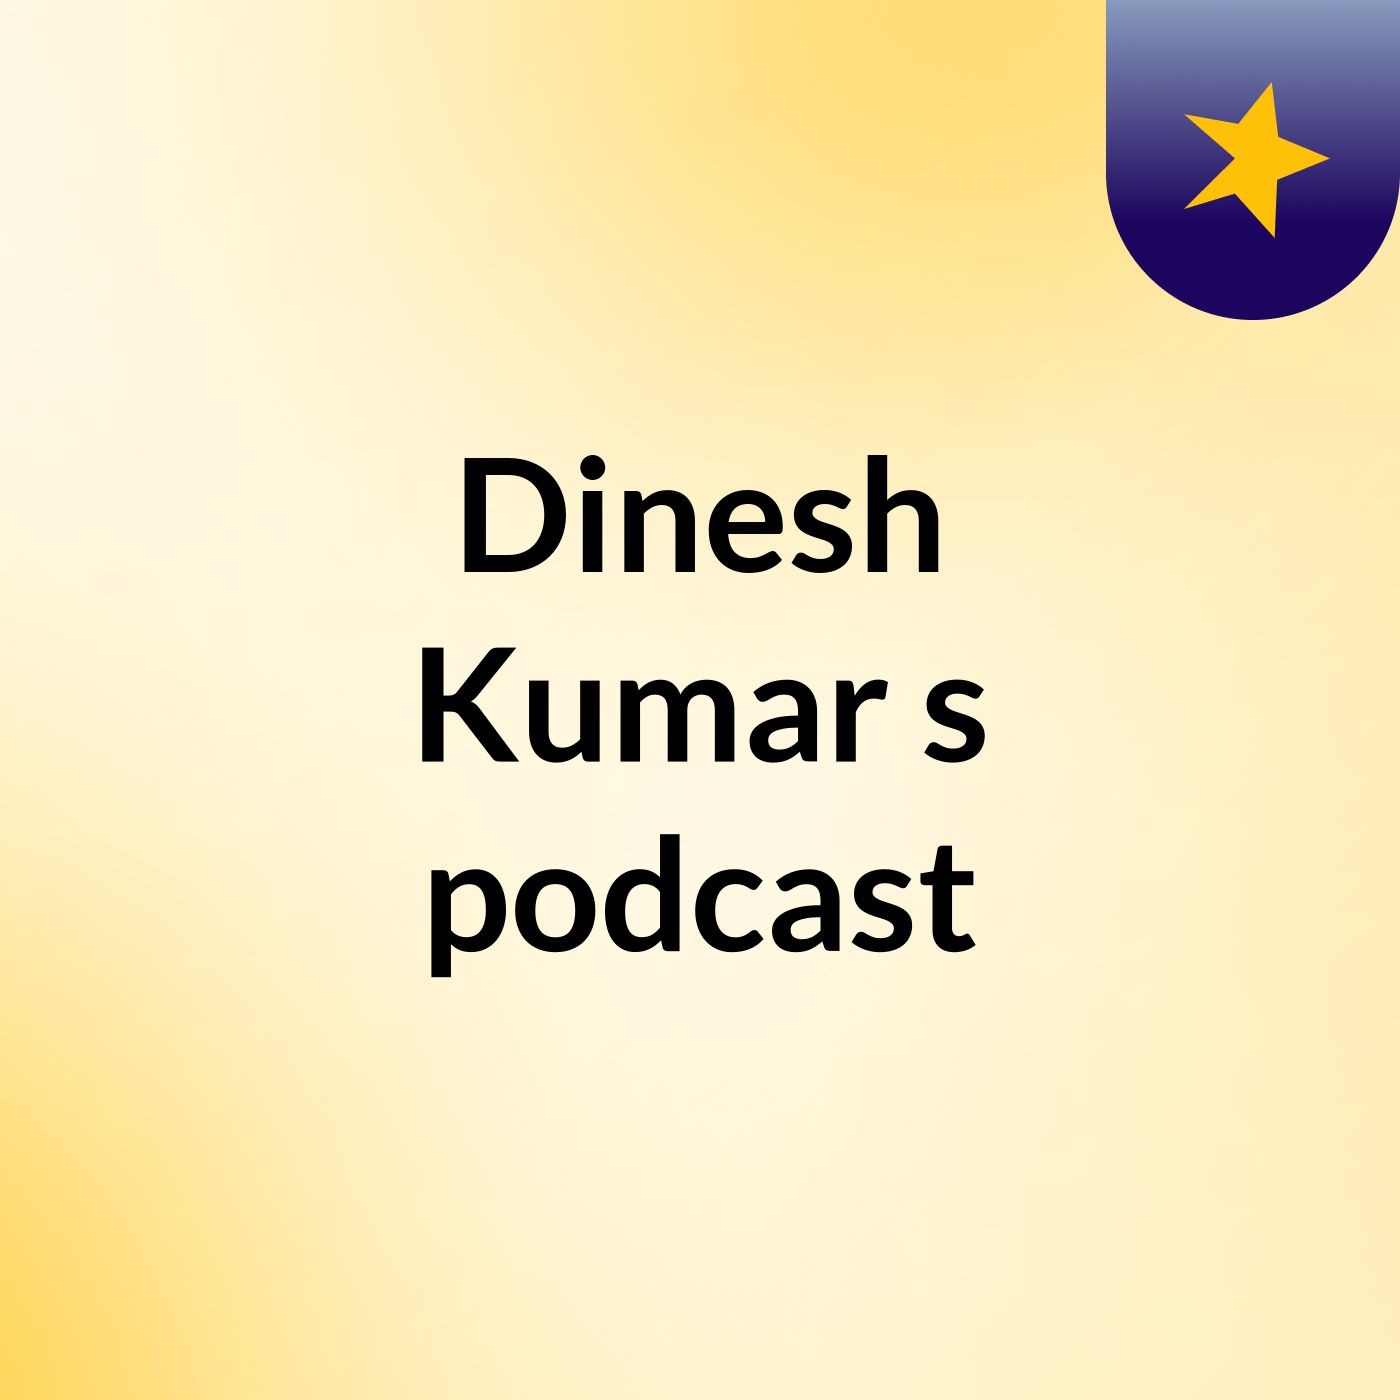 Episode 3 - Dinesh Kumar's podcast